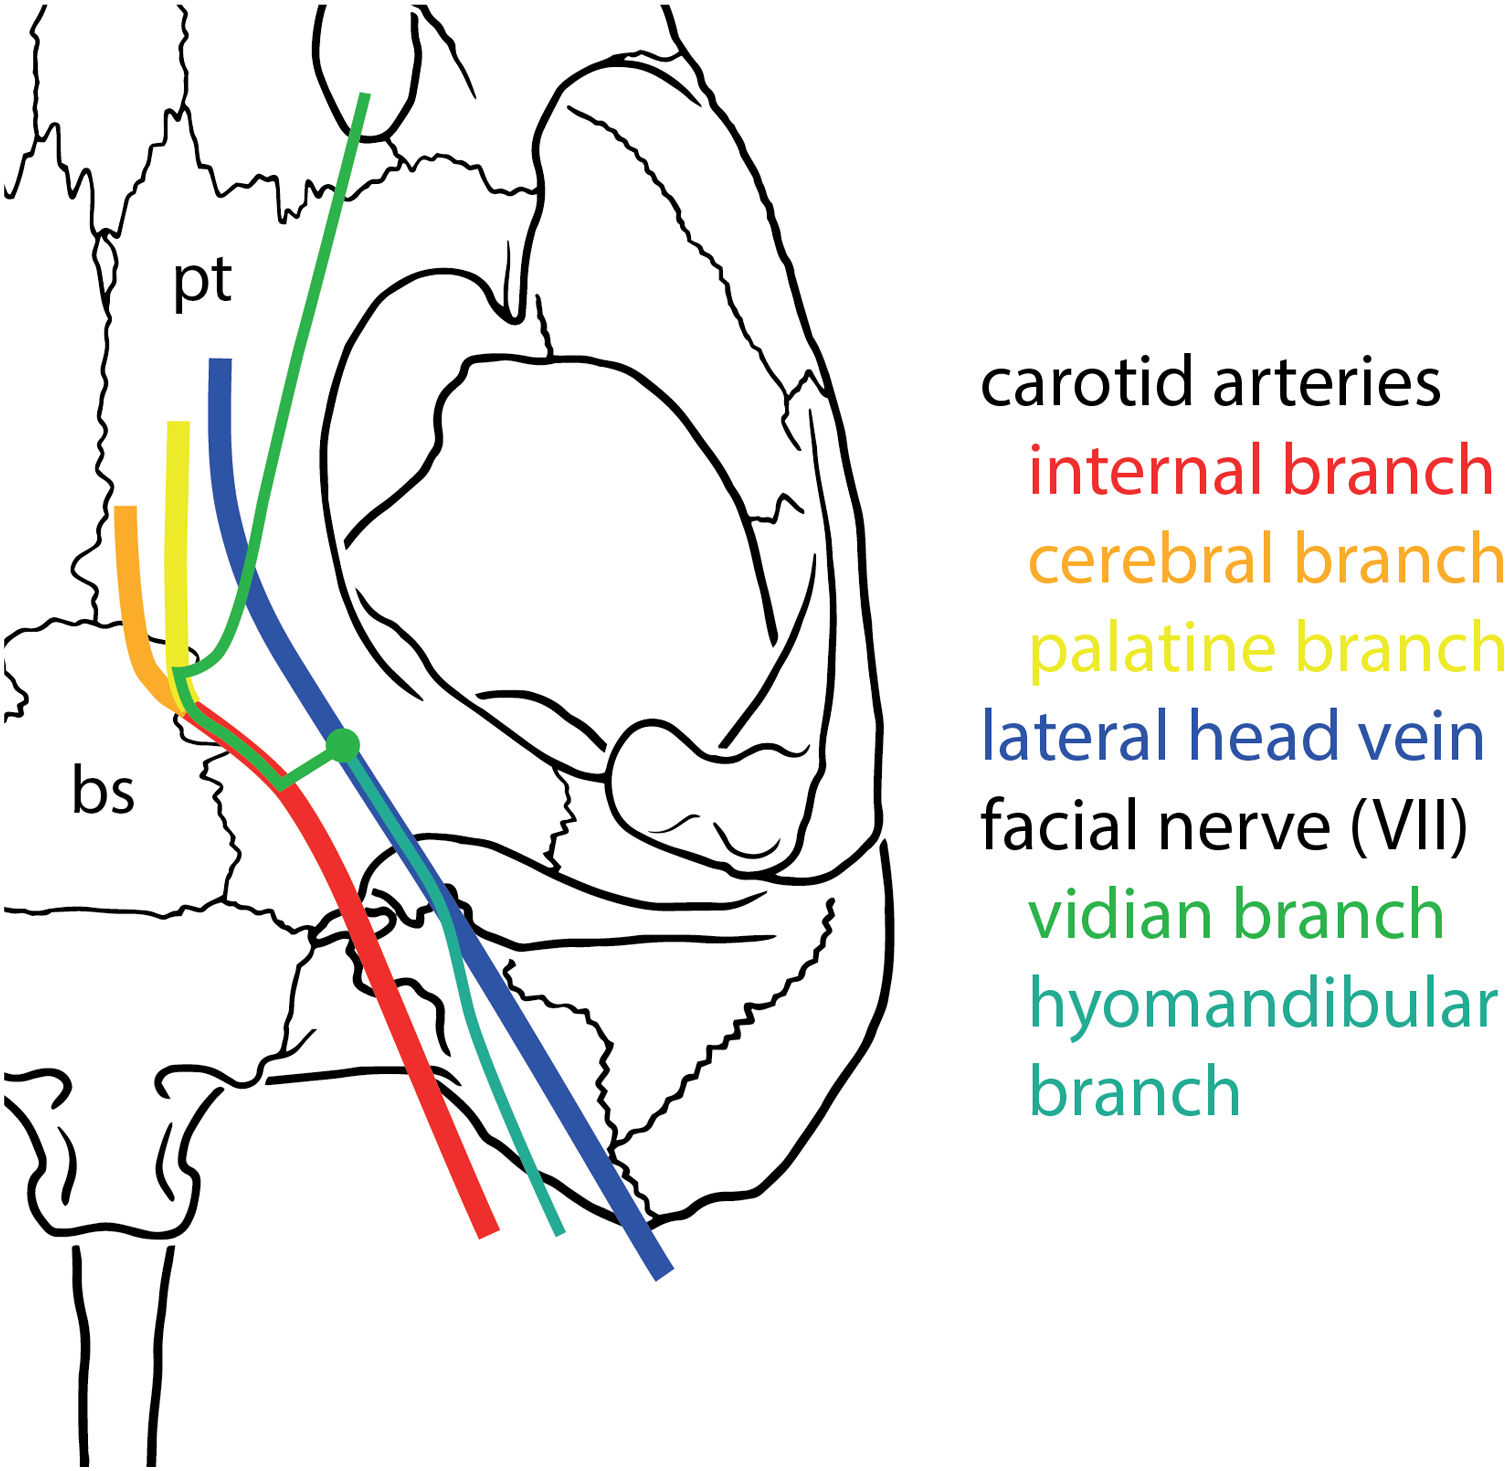 internal carotid nerve